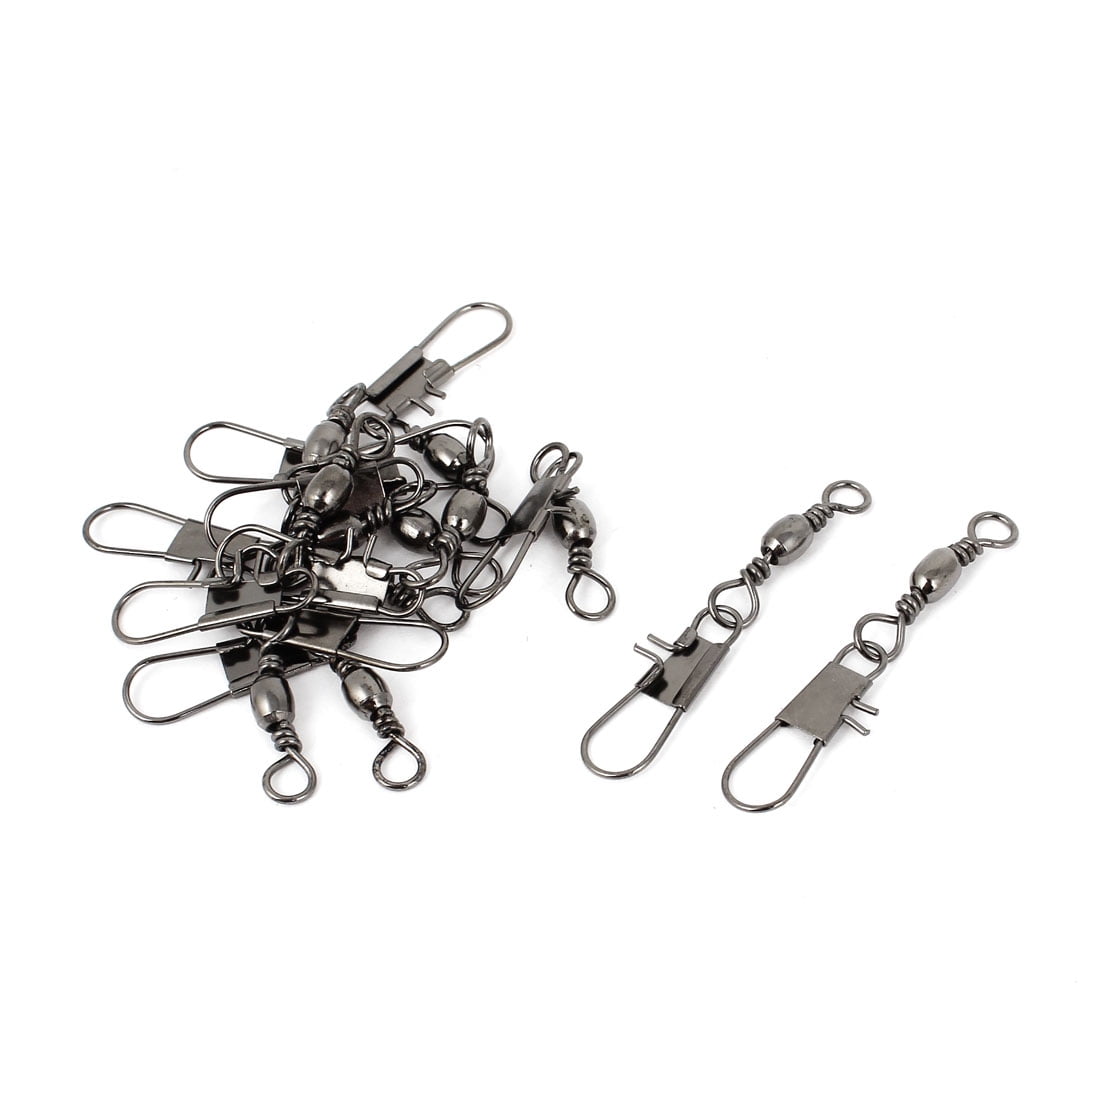 Unique Bargains 4# Fishing Tackle Metal Line to Hook Clip Connector Swivel  12 Pcs 